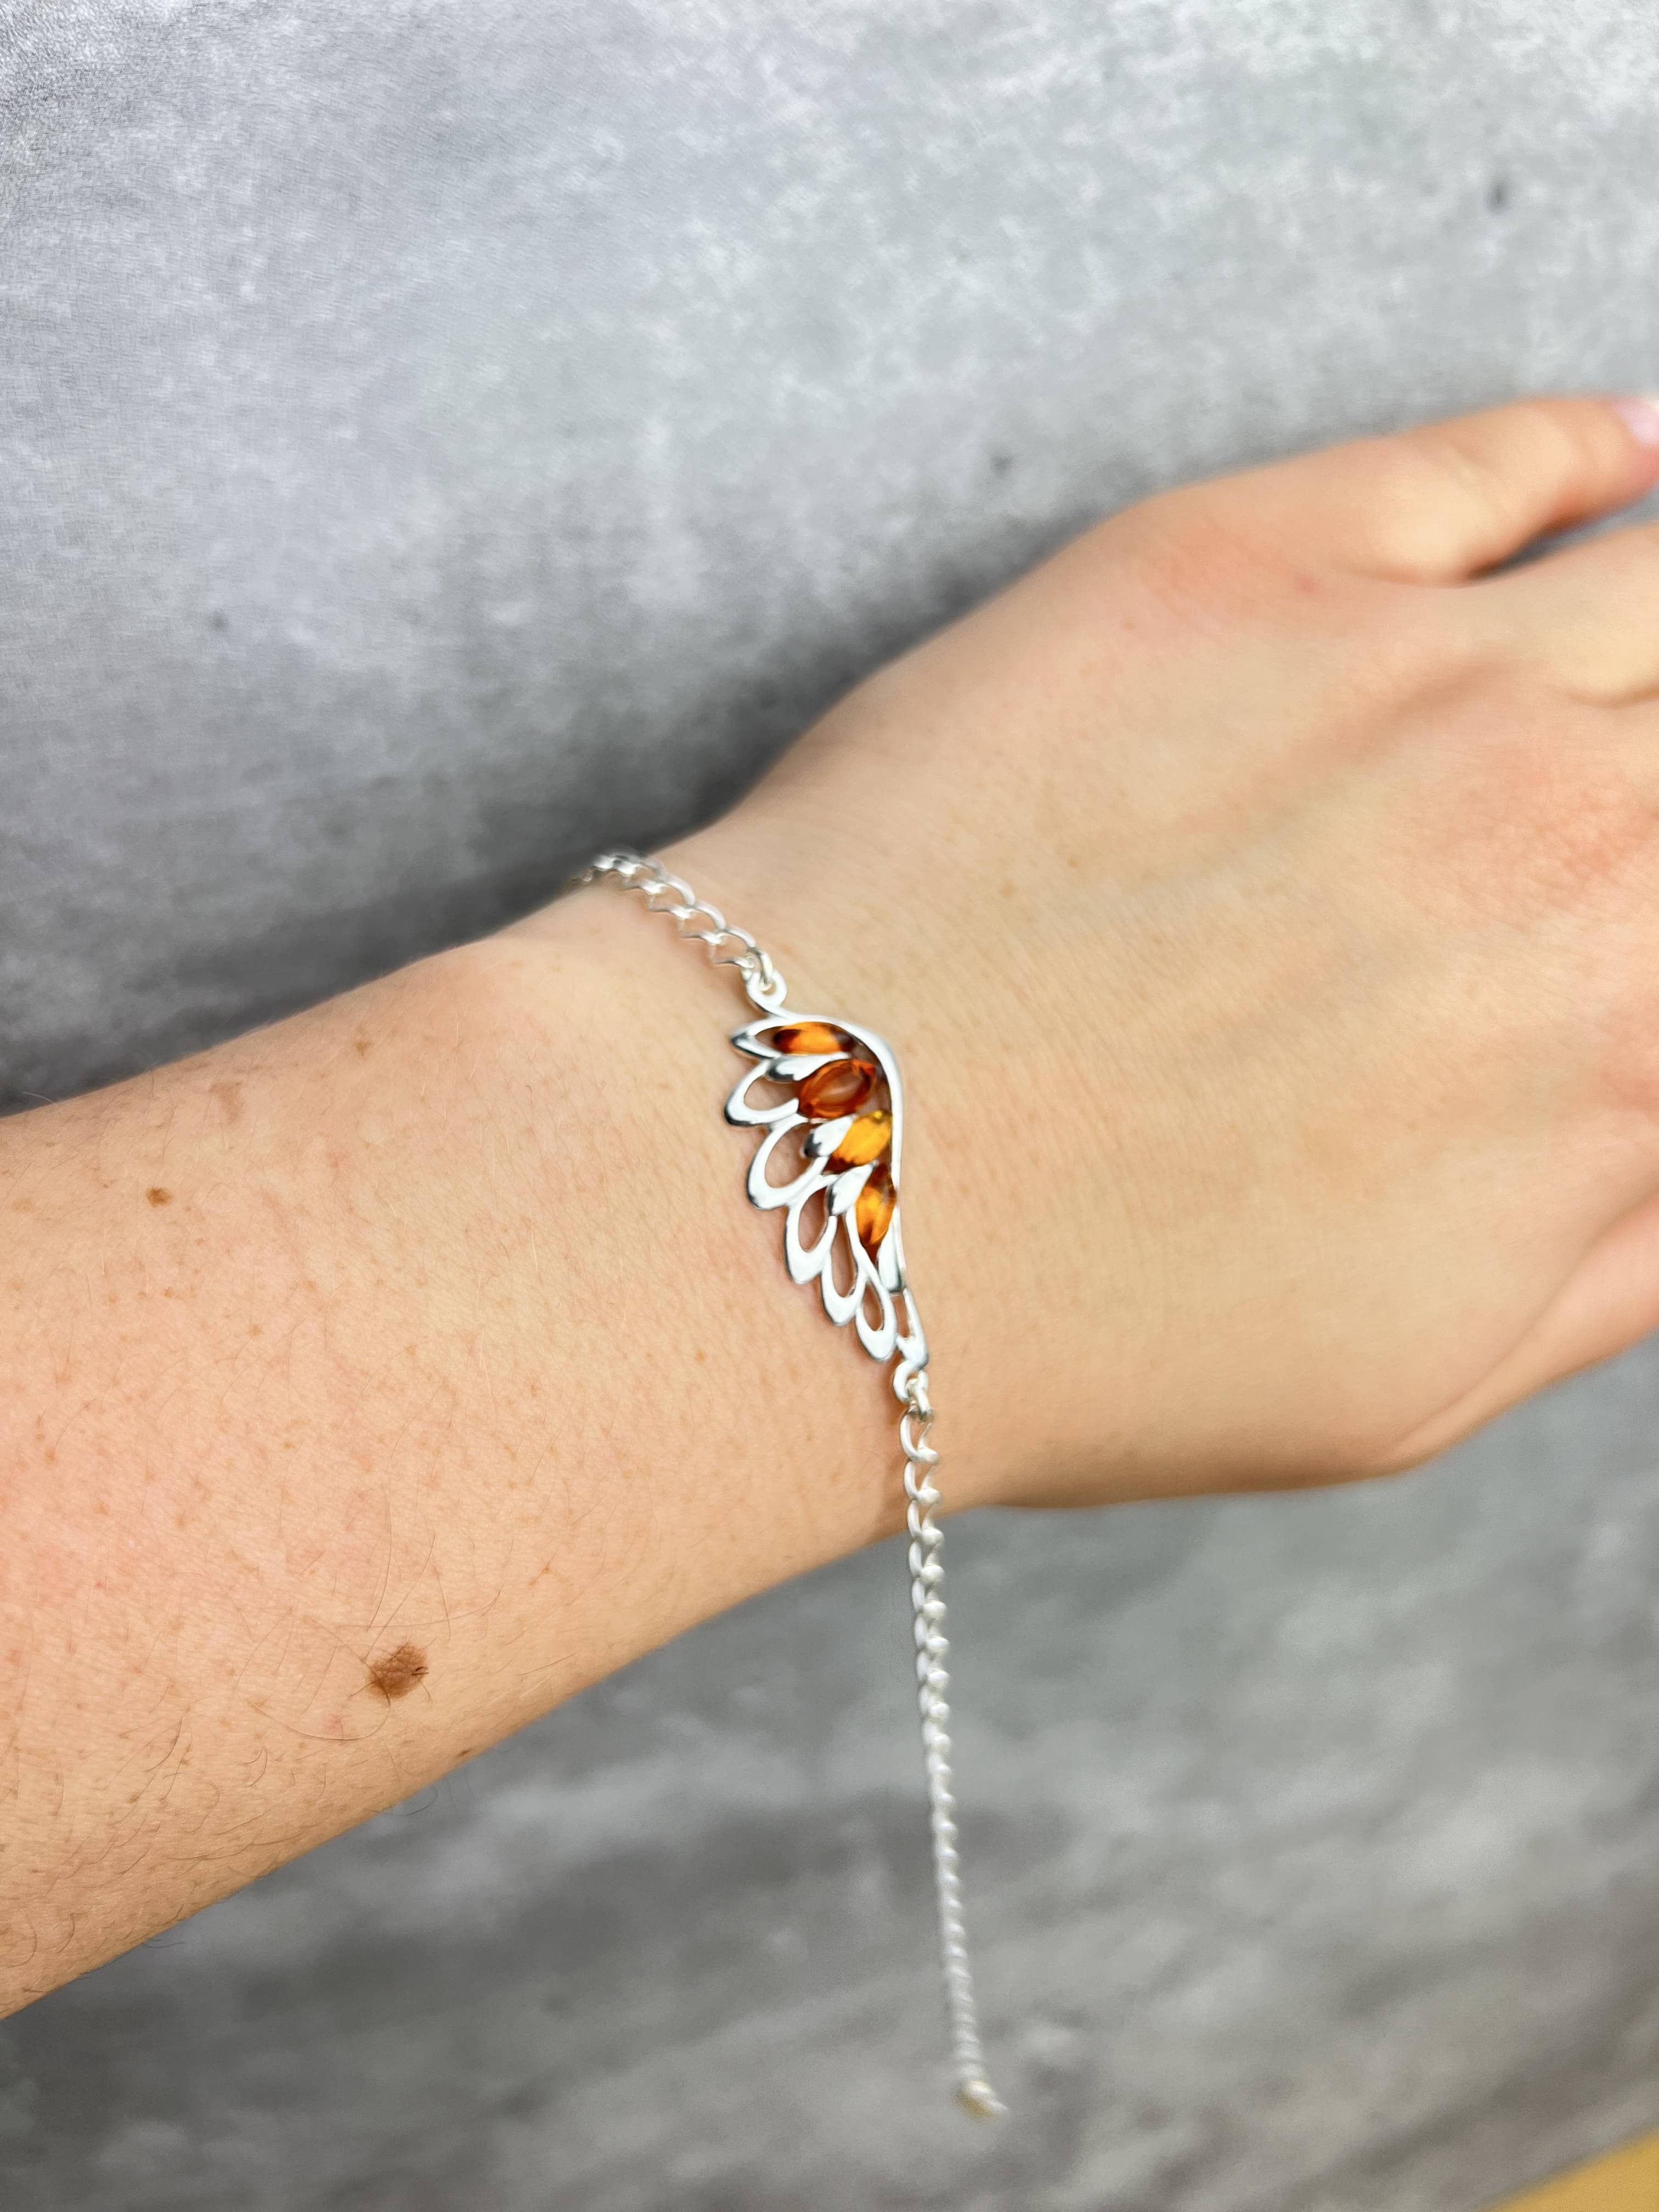 Beautiful Designer Silver Angel Wing Bracelet set with Baltic Amber - GL559